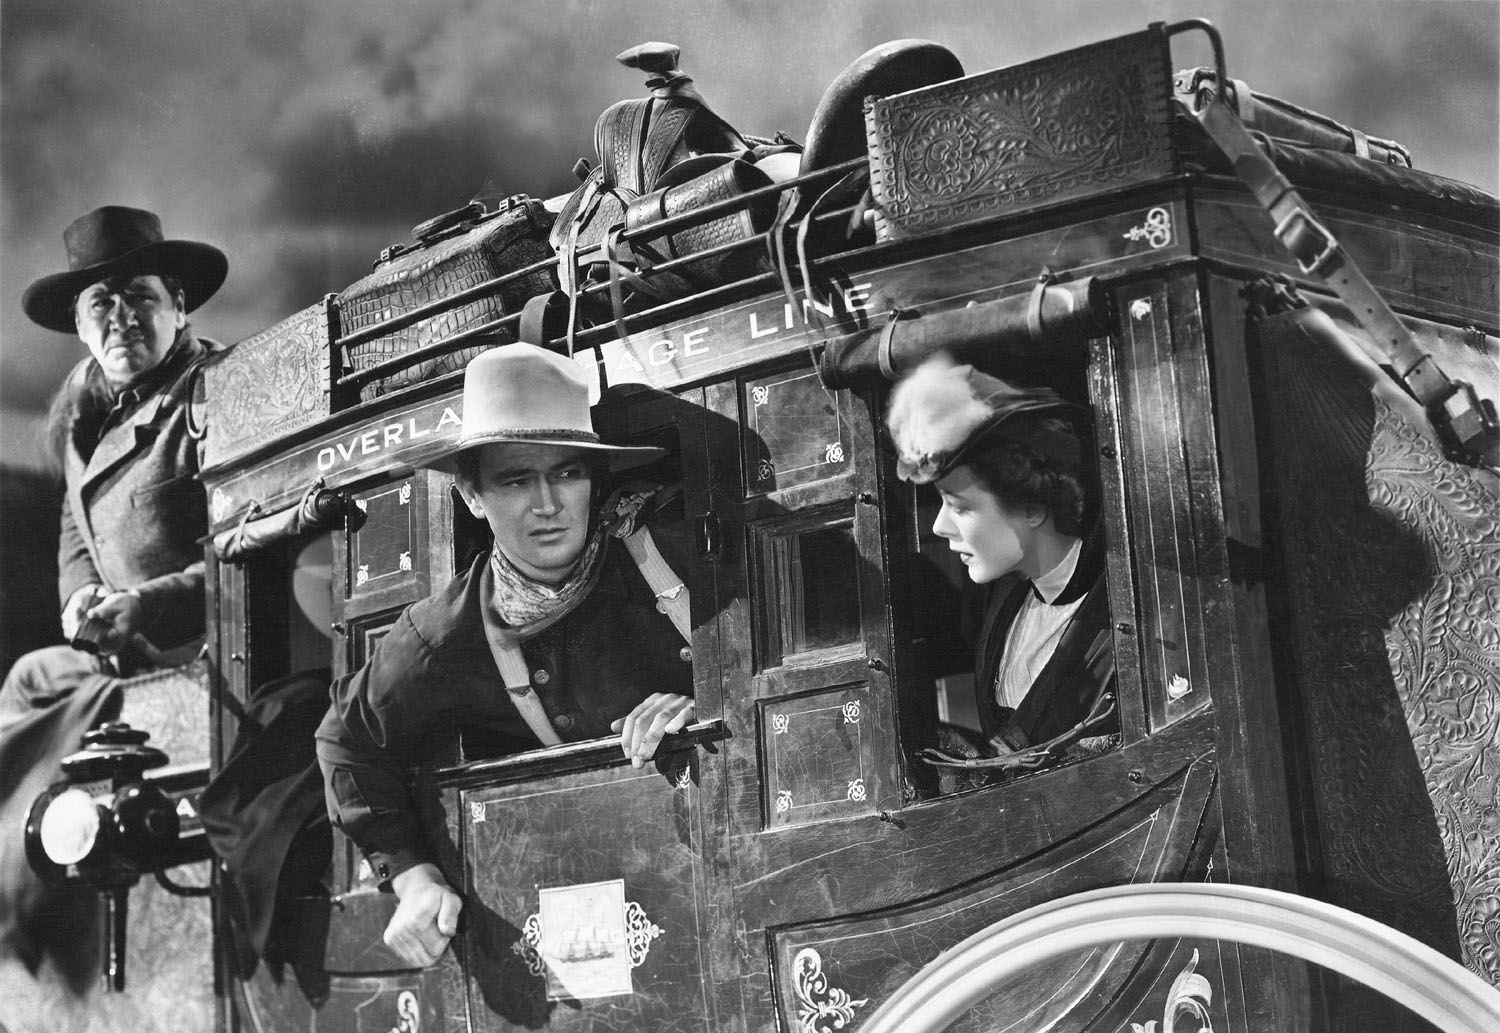 John Wayne in Stagecoach